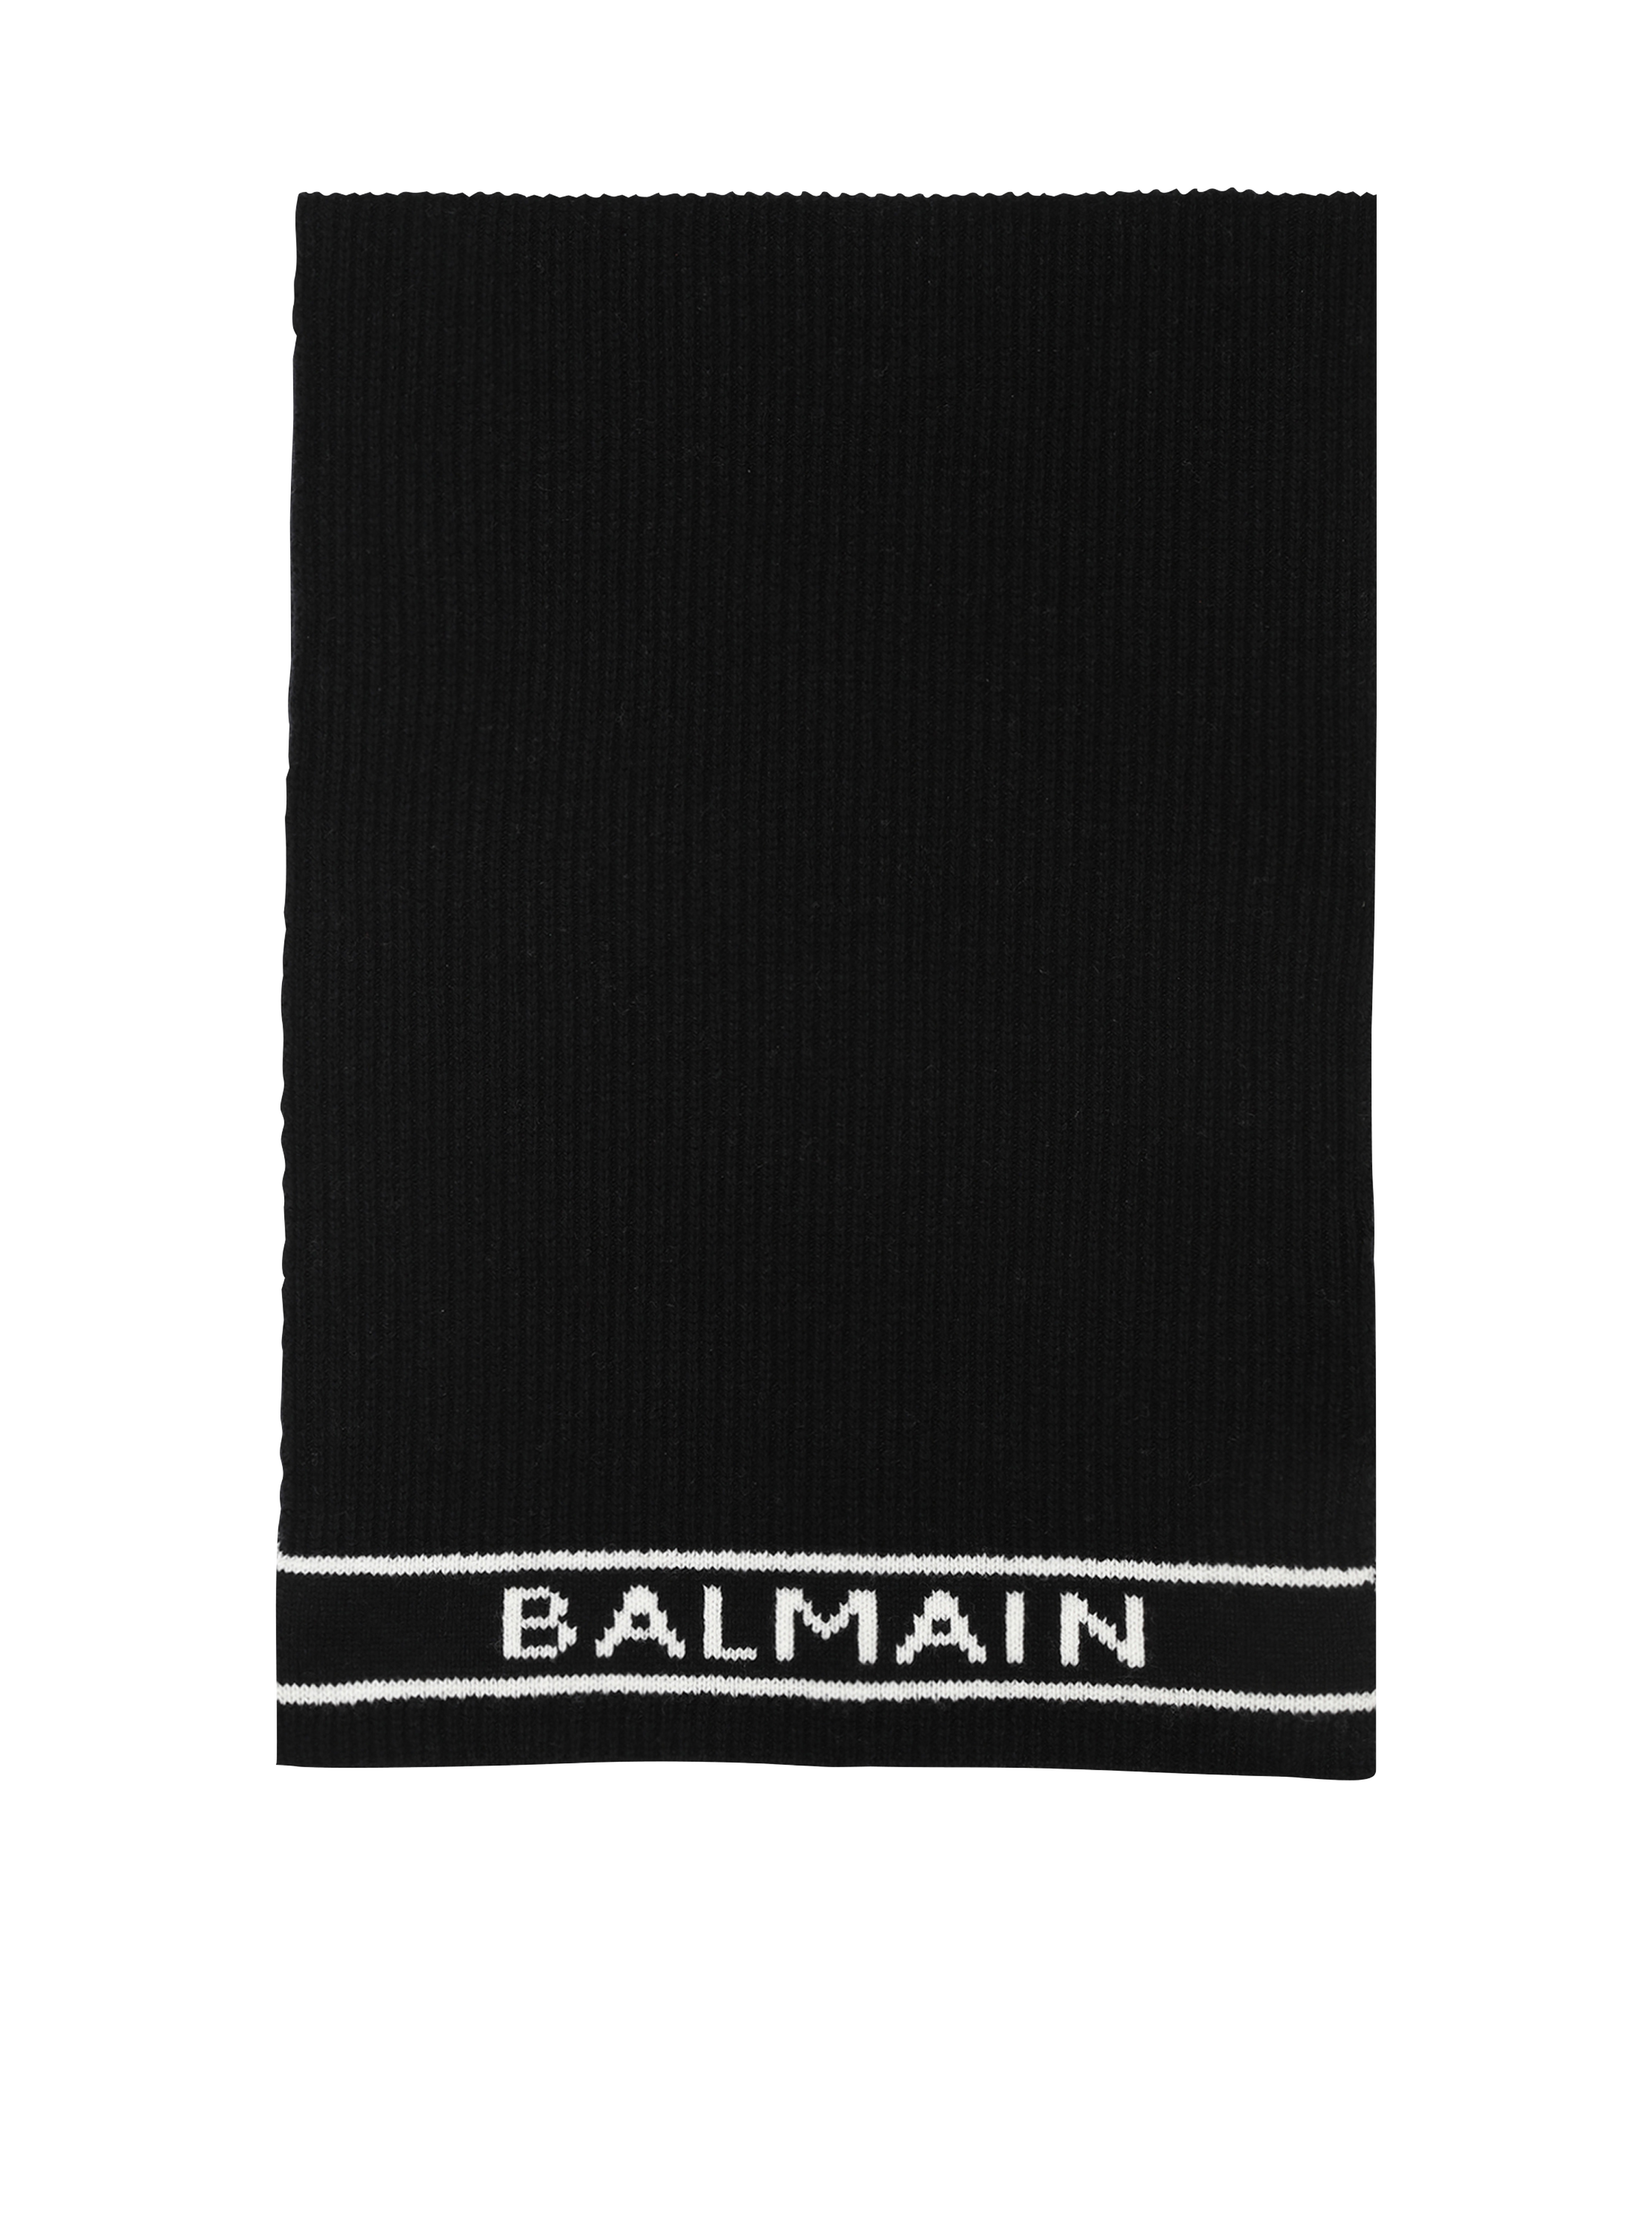 Sciarpa in lana con logo Balmain, nero